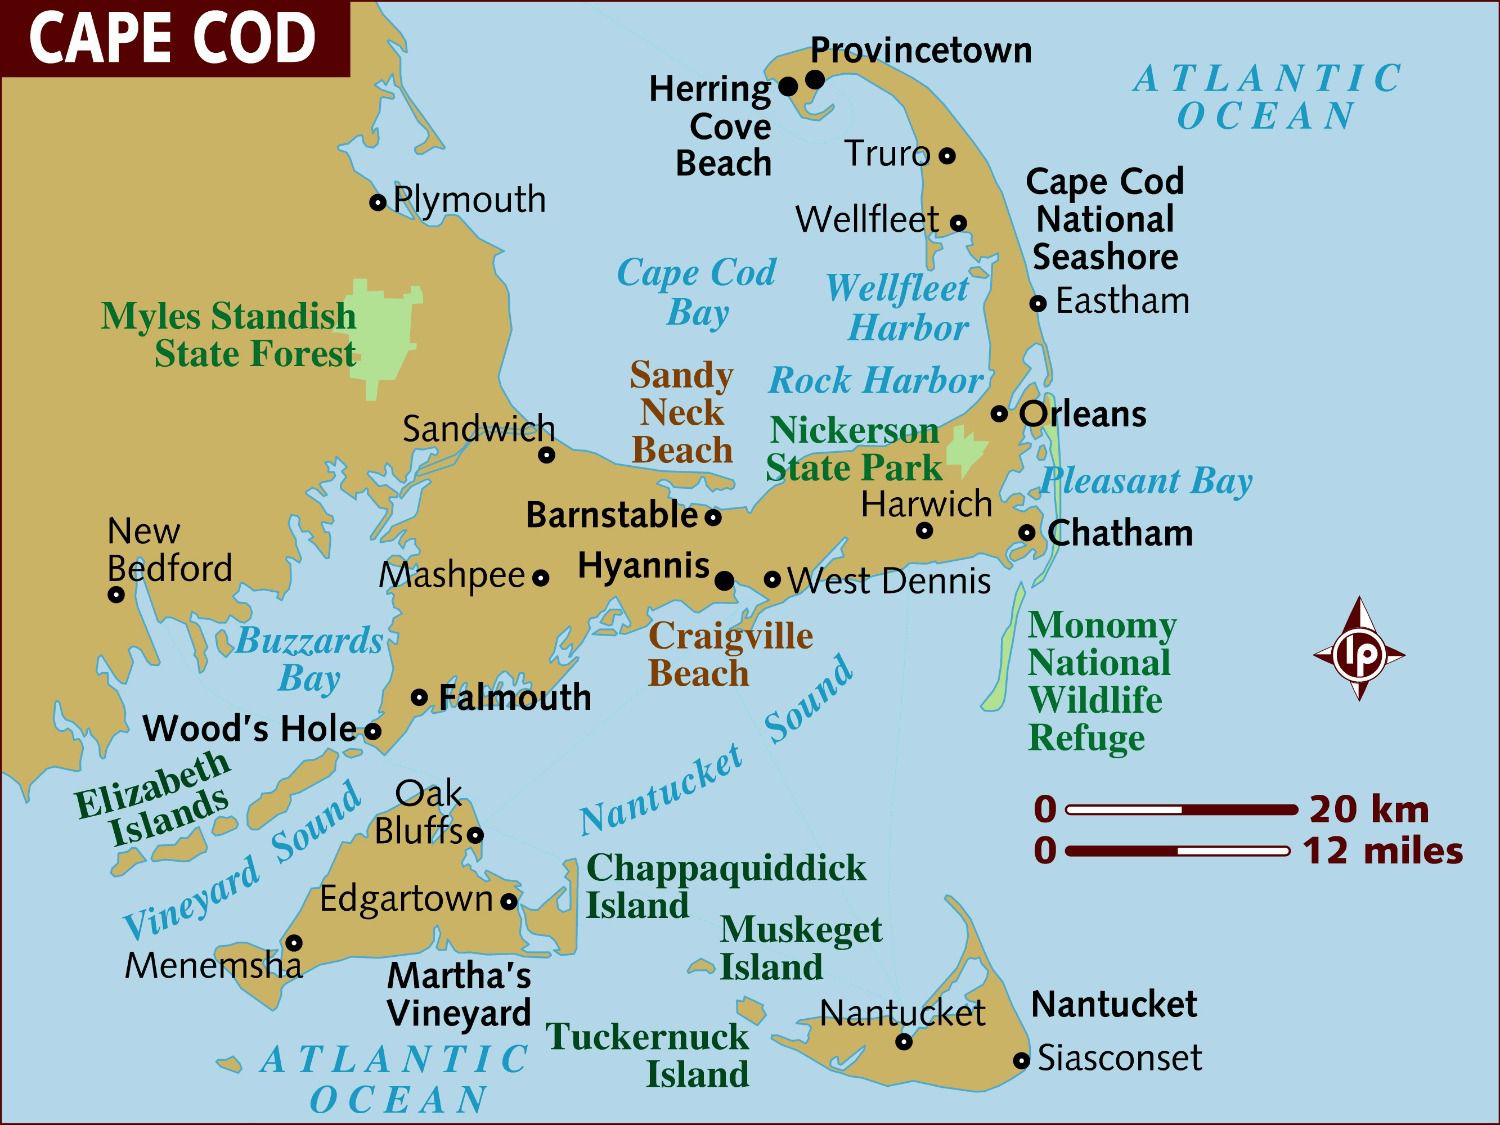 Maps of Cape Cod, Martha's Vineyard, and Nantucket